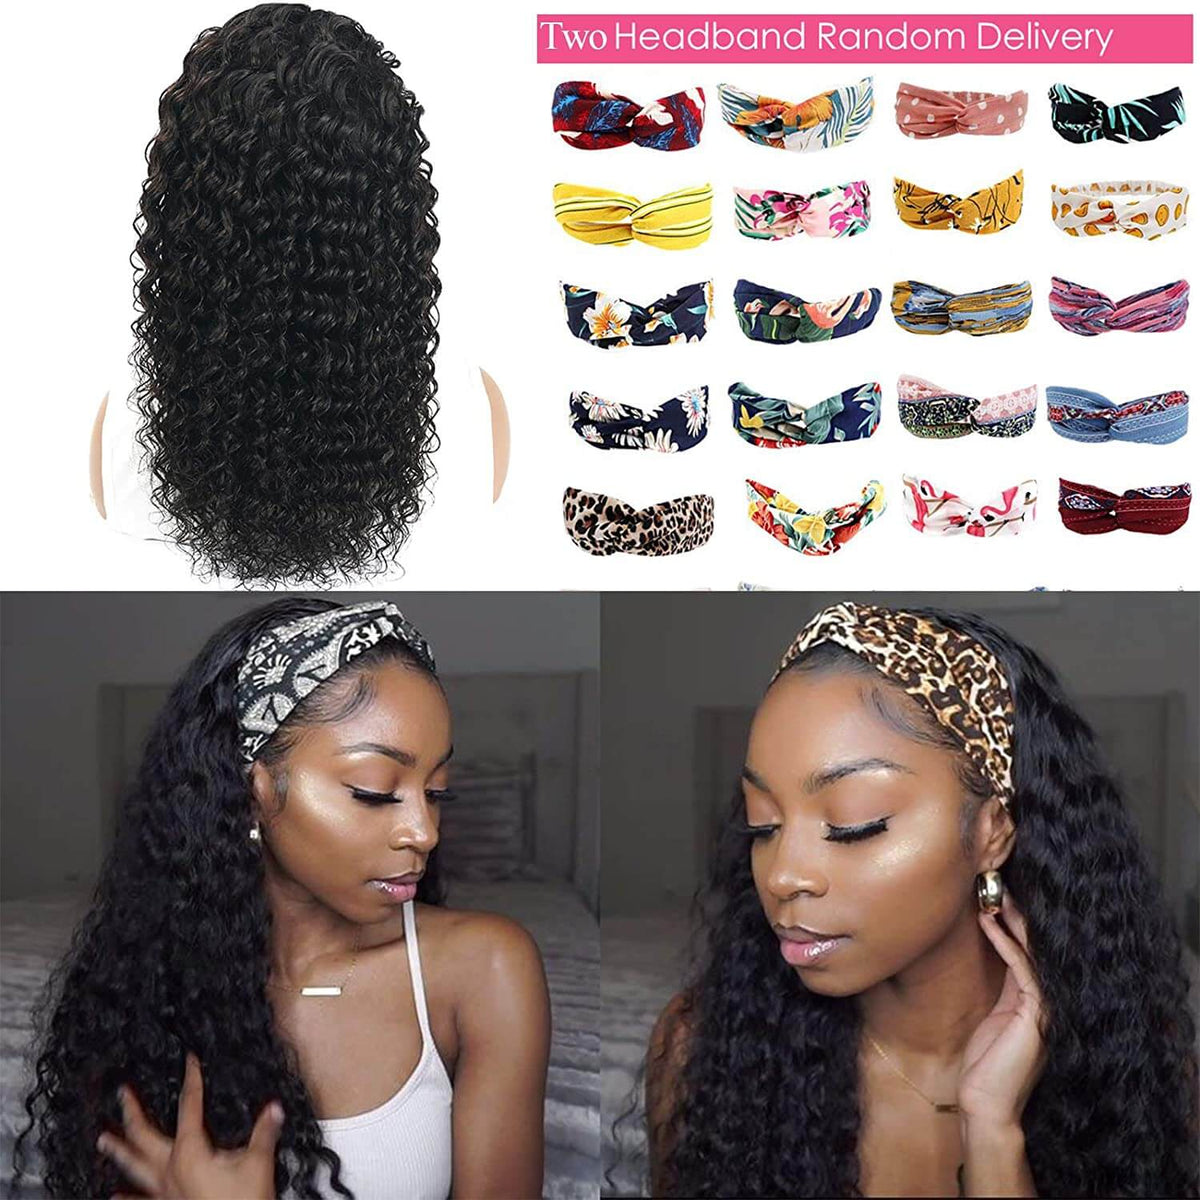 Deep Wave Headbang Wigs for African American Women Human Hair Wig Customer Show